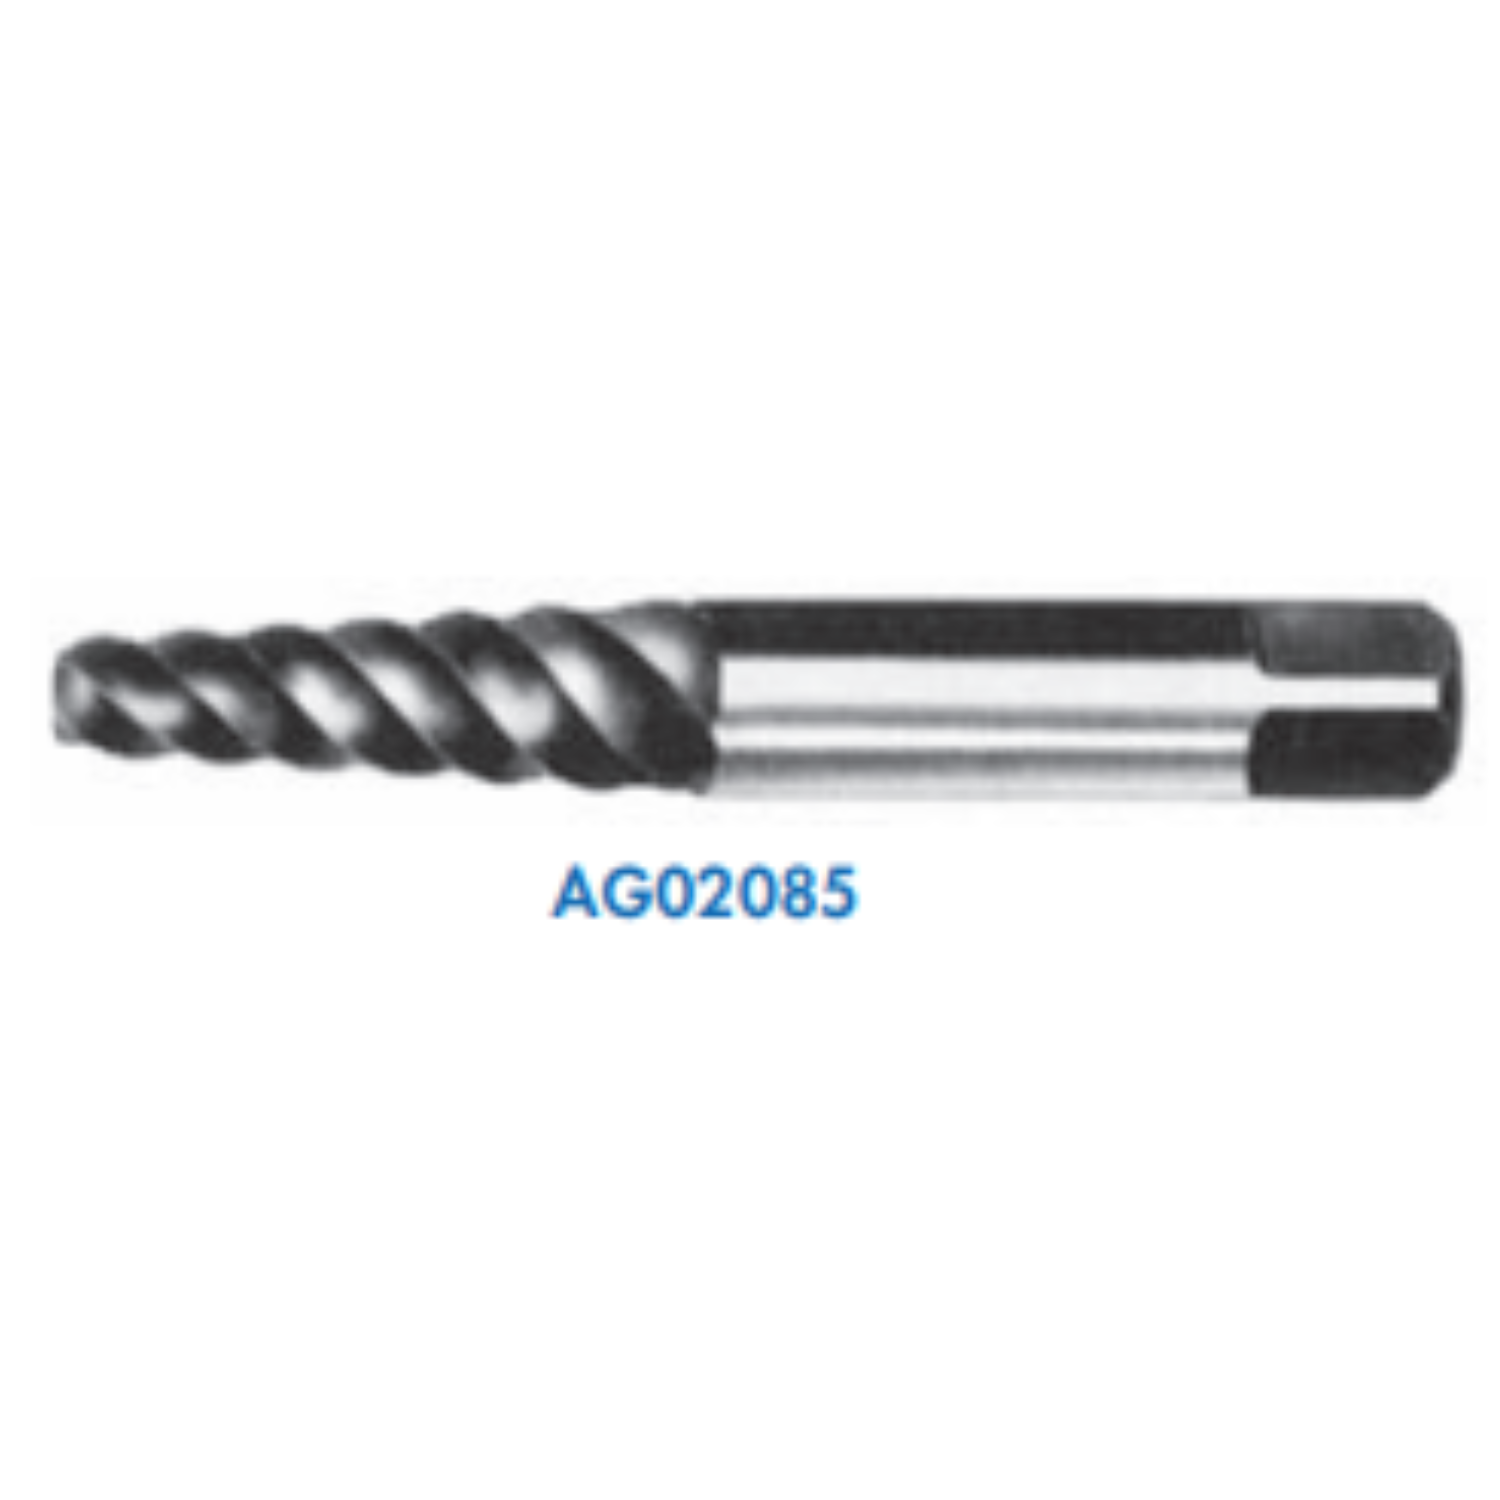 YEW AIK AG02085 General Cutting Tools Screw Extractor - Premium Screw Extractor from YEW AIK - Shop now at Yew Aik.